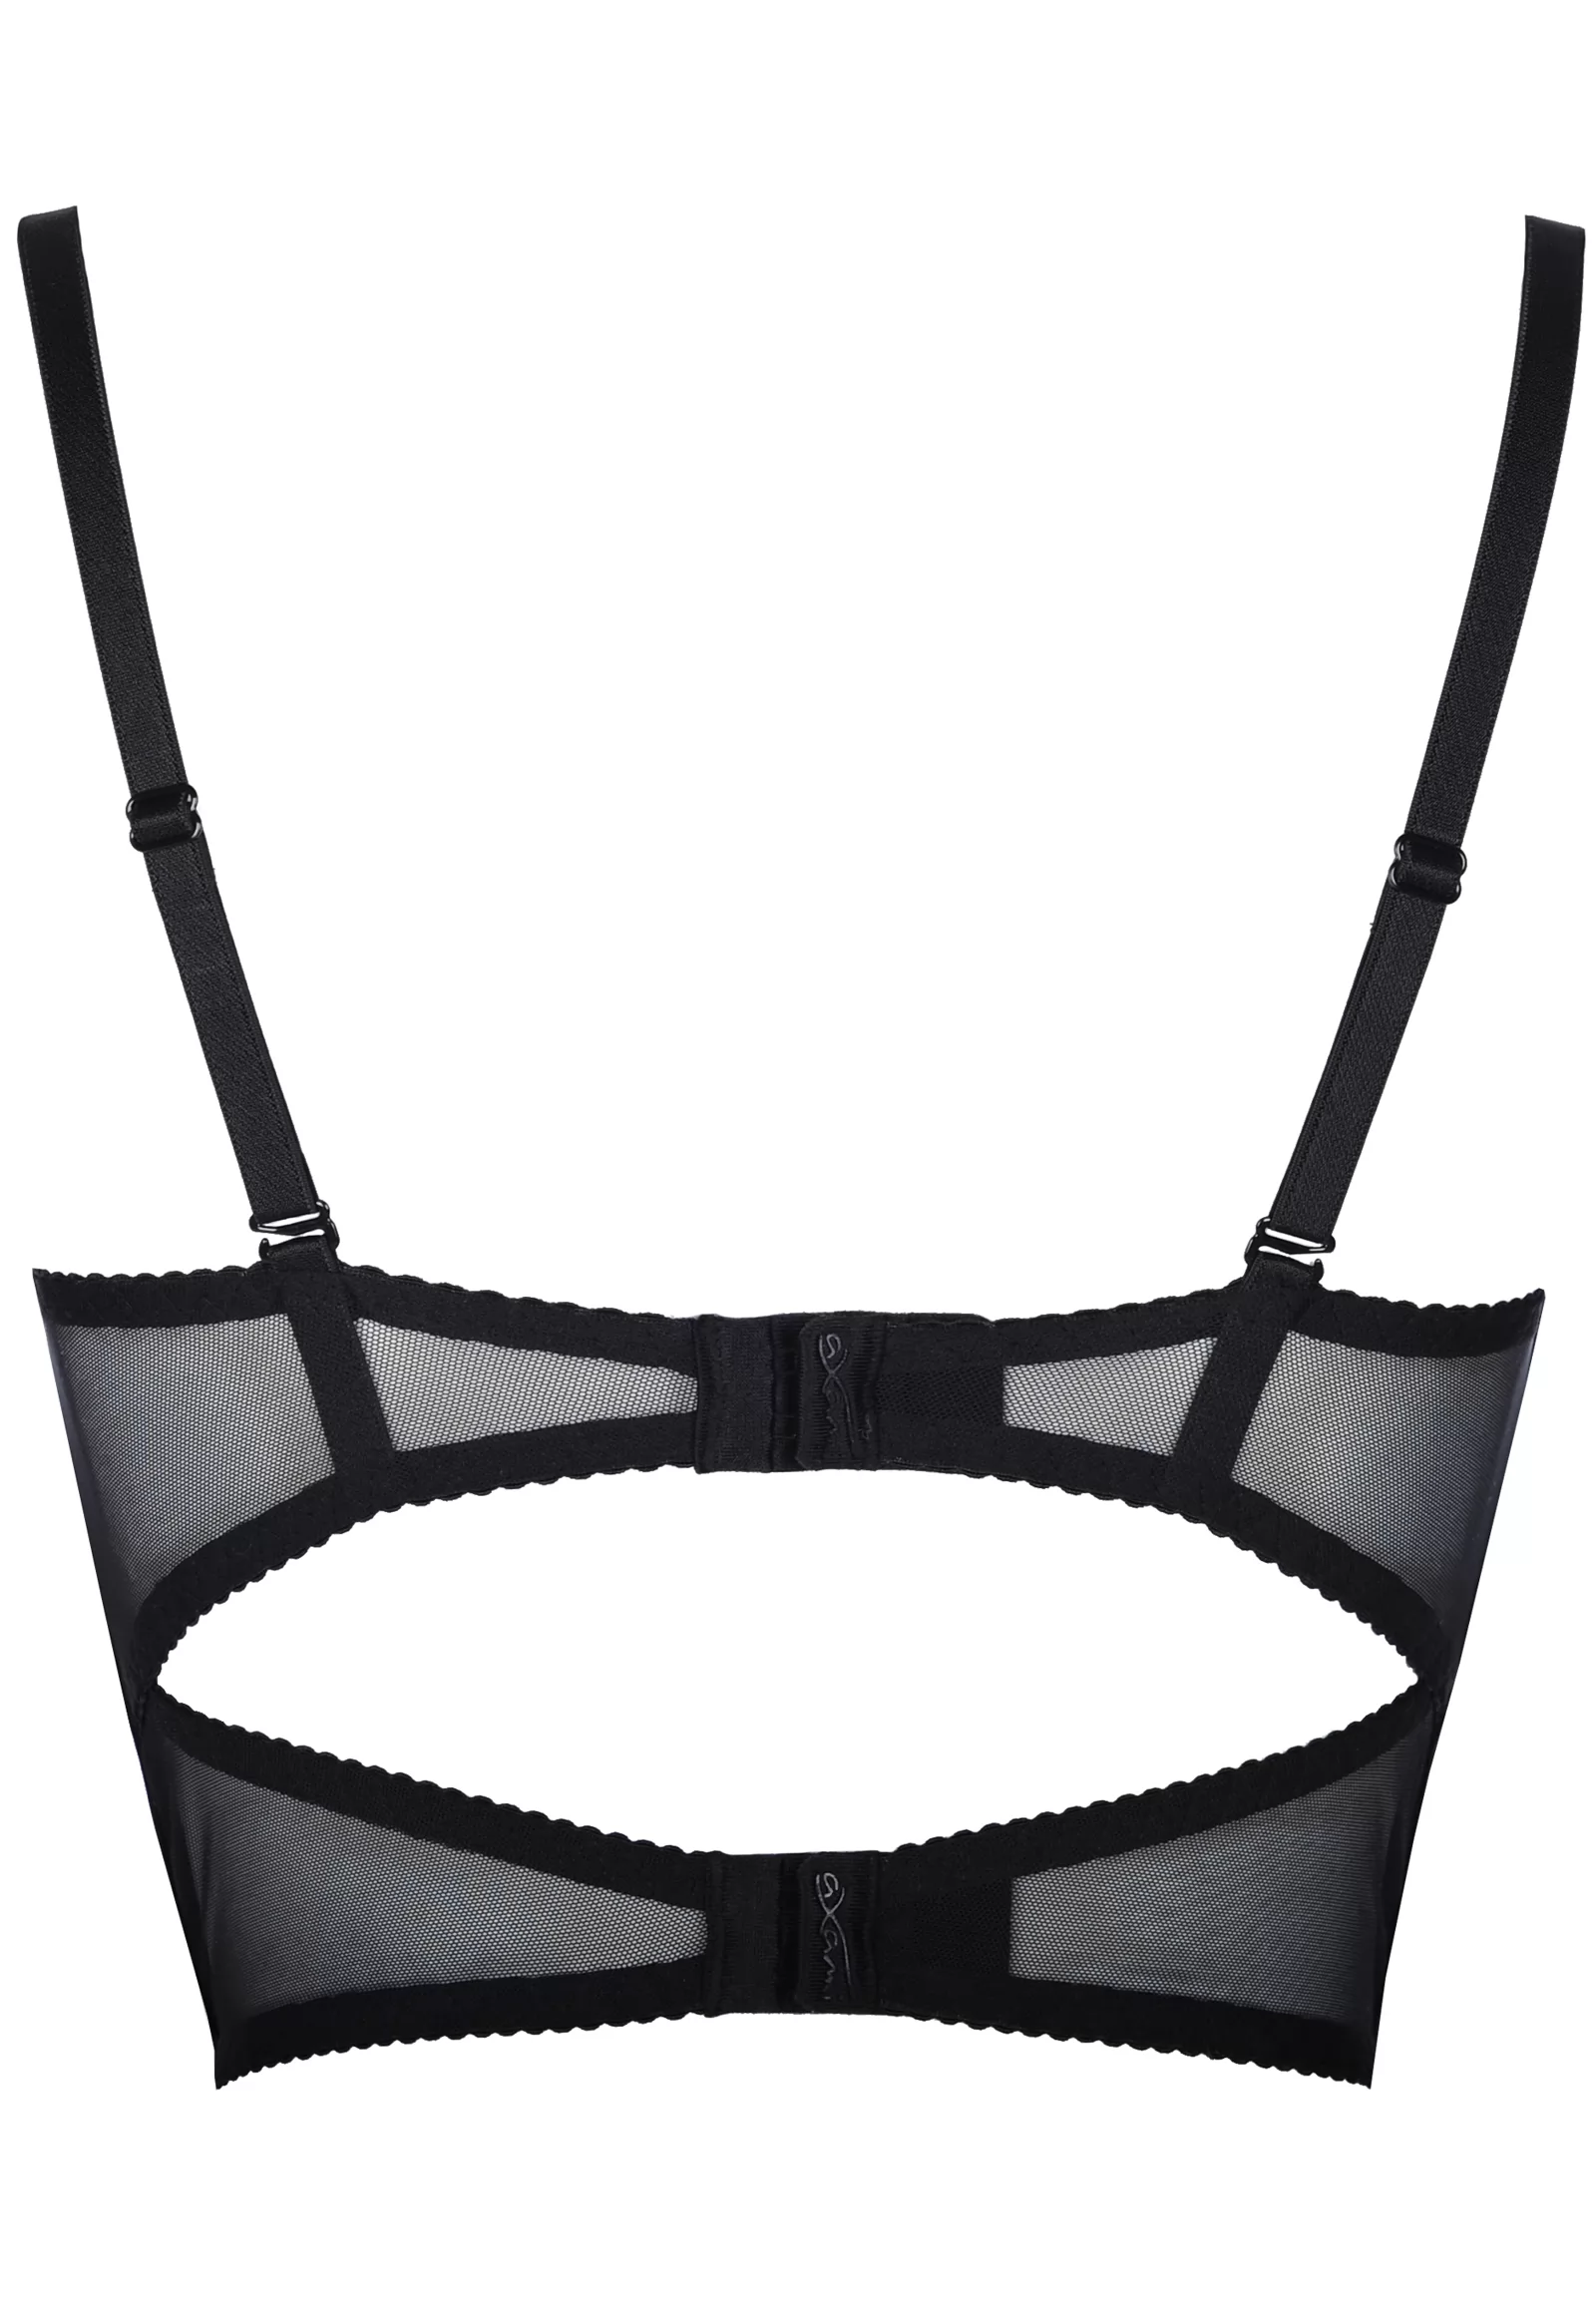 Black lace mesh bustier bra